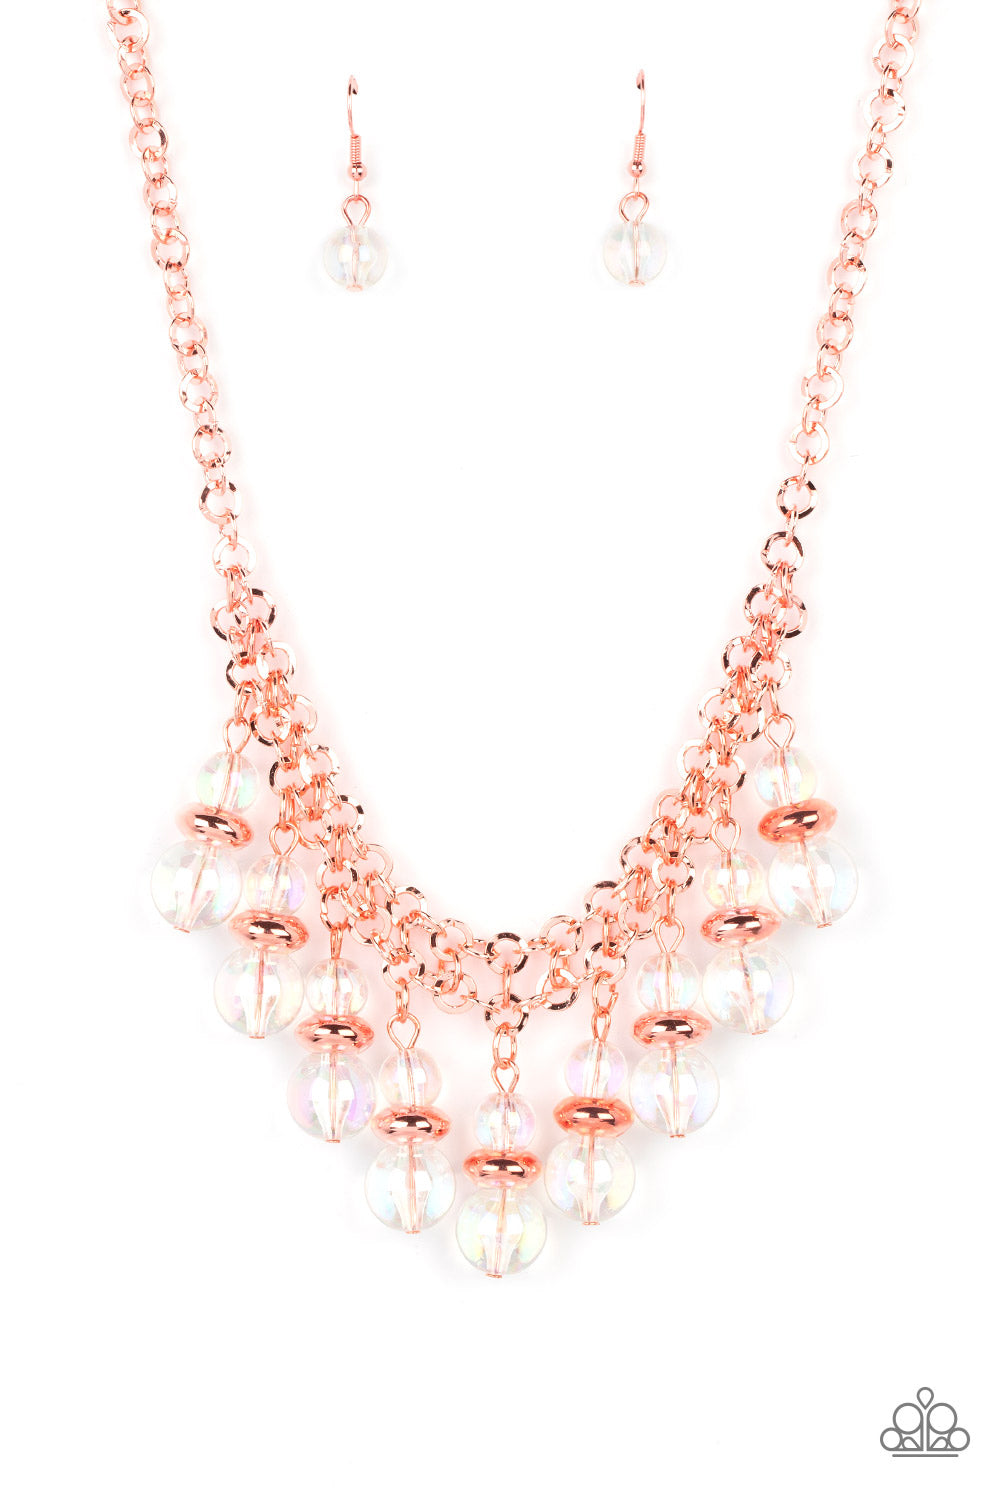 five-dollar-jewelry-deep-space-diva-copper-necklace-paparazzi-accessories